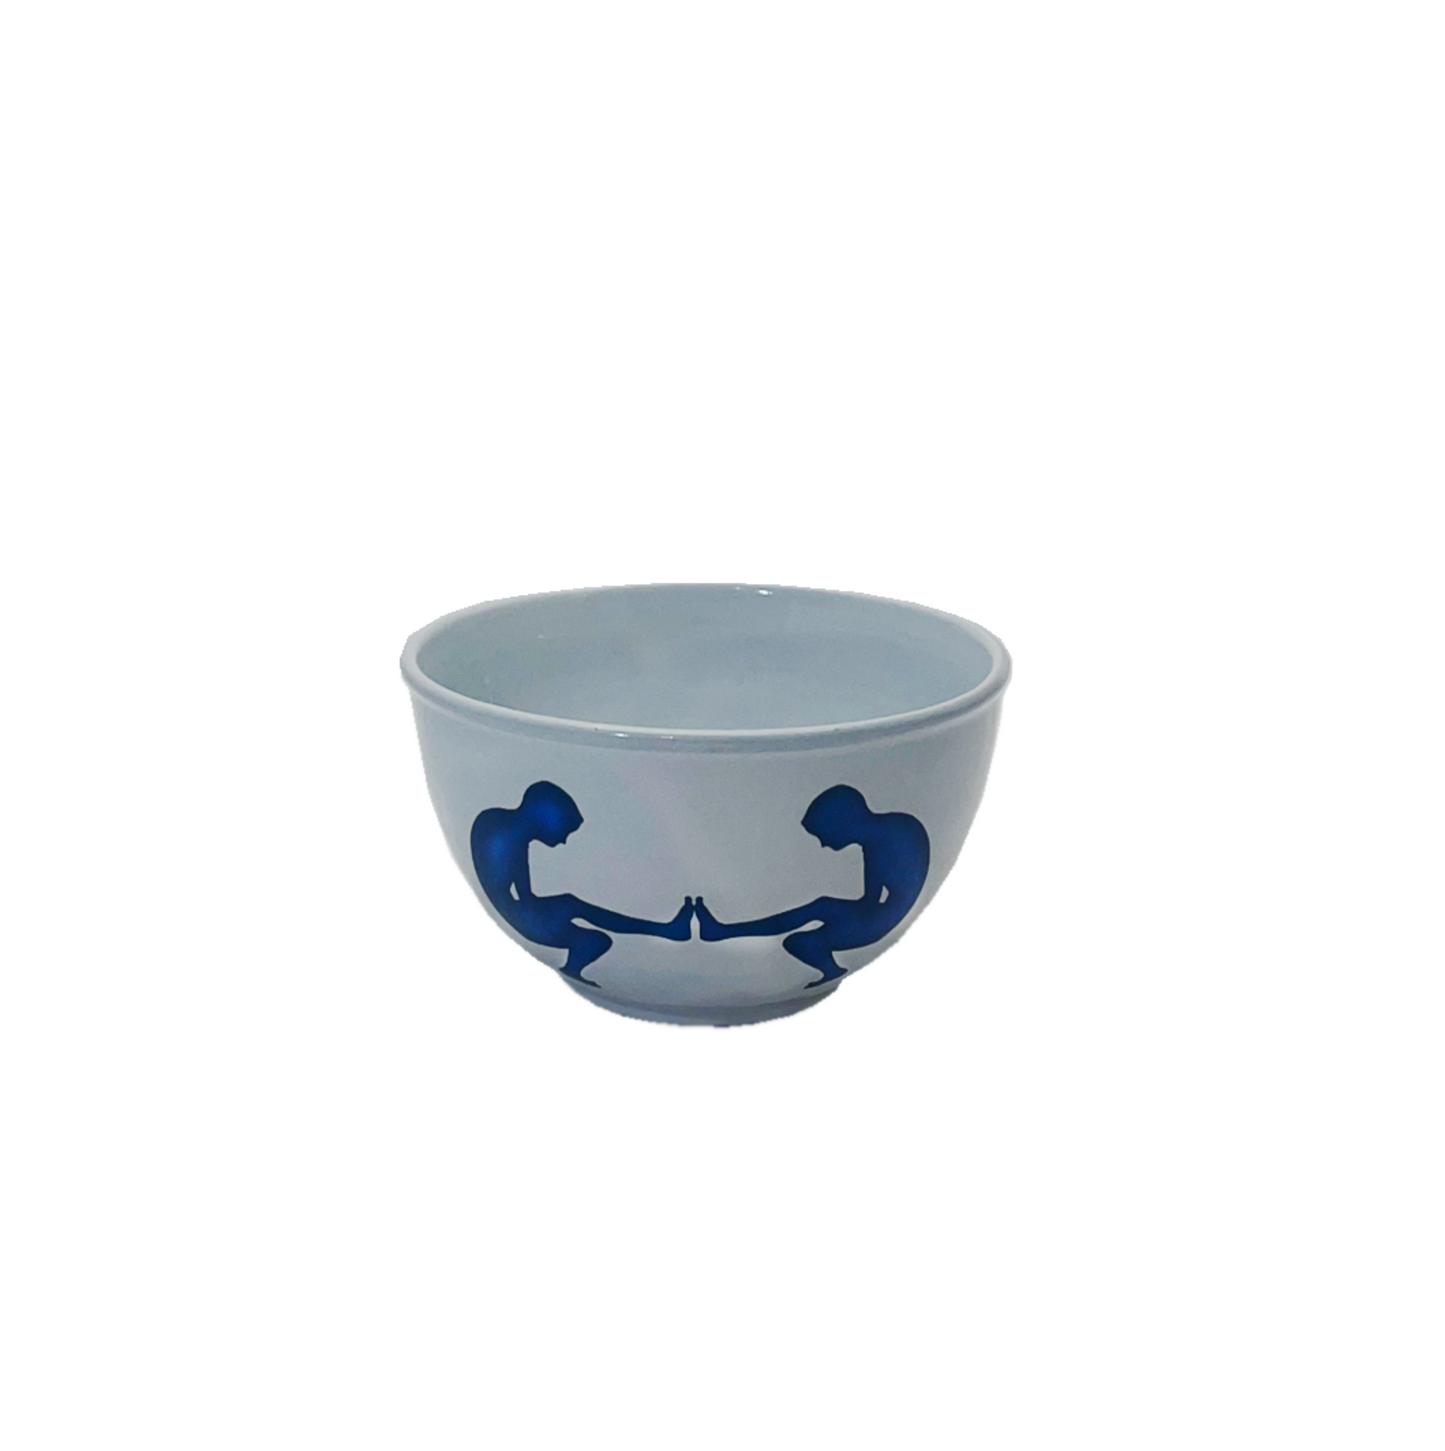 Gemini ceramic bowl